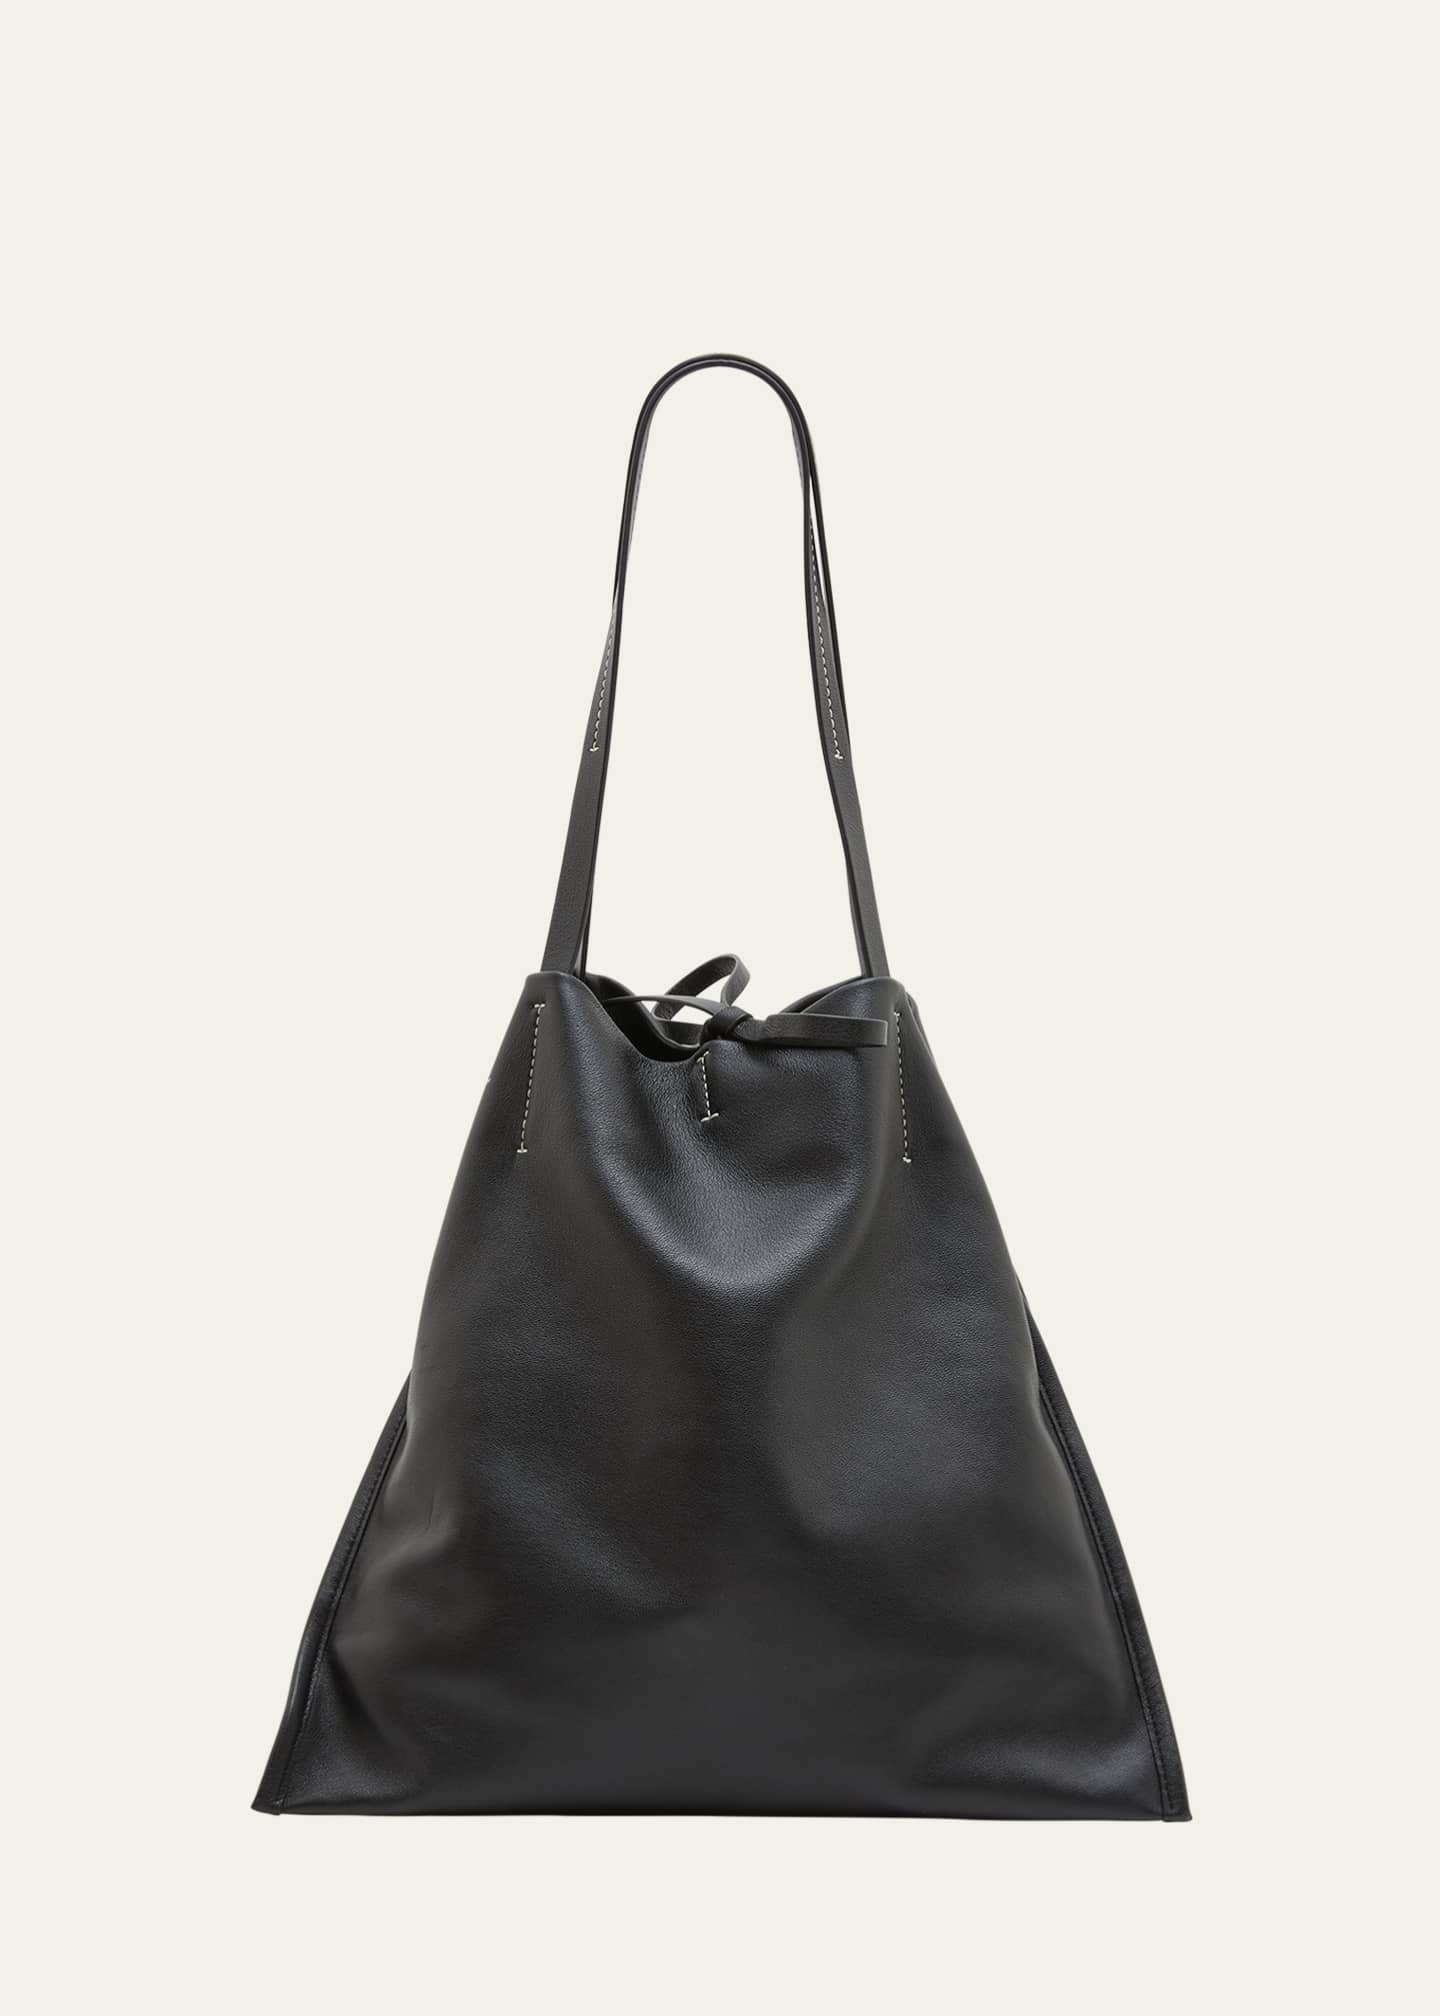 Proenza Schouler White Label Twin leather tote bag - Black